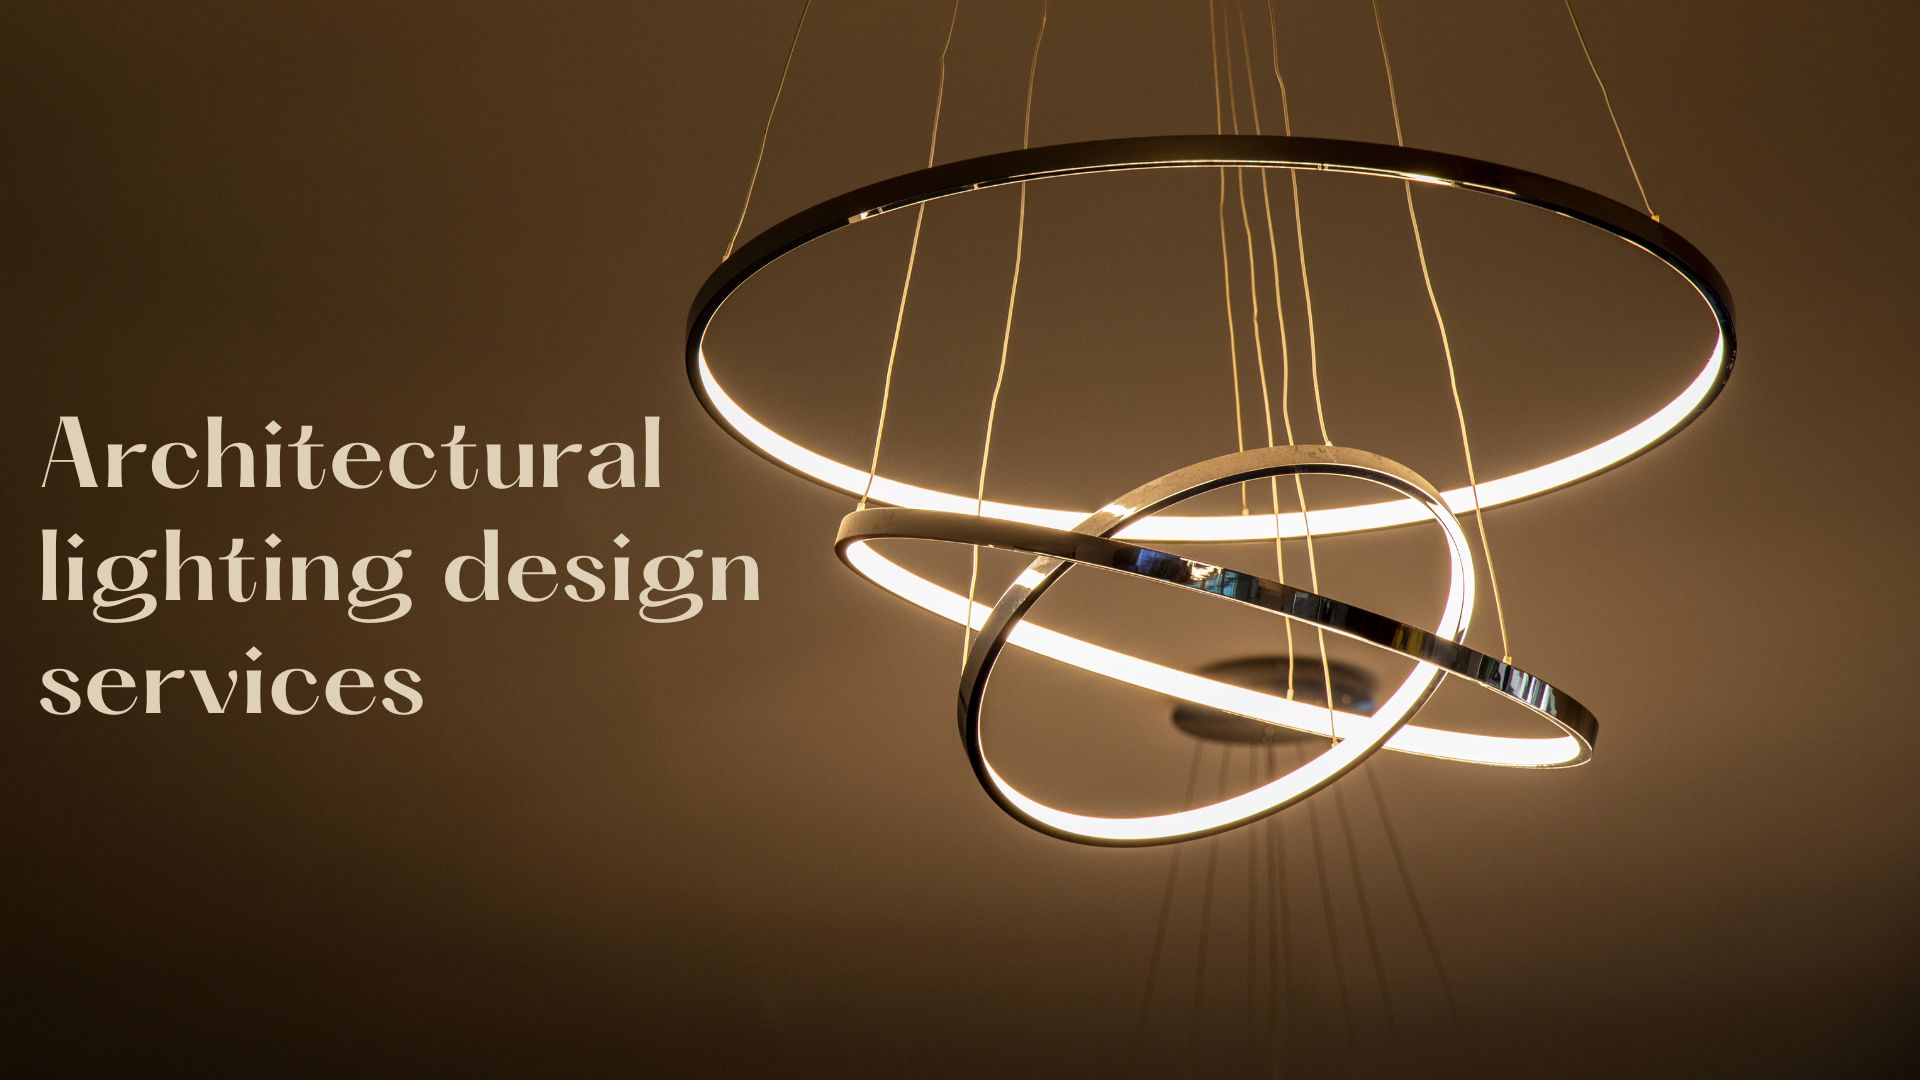 Architectural lighting design services